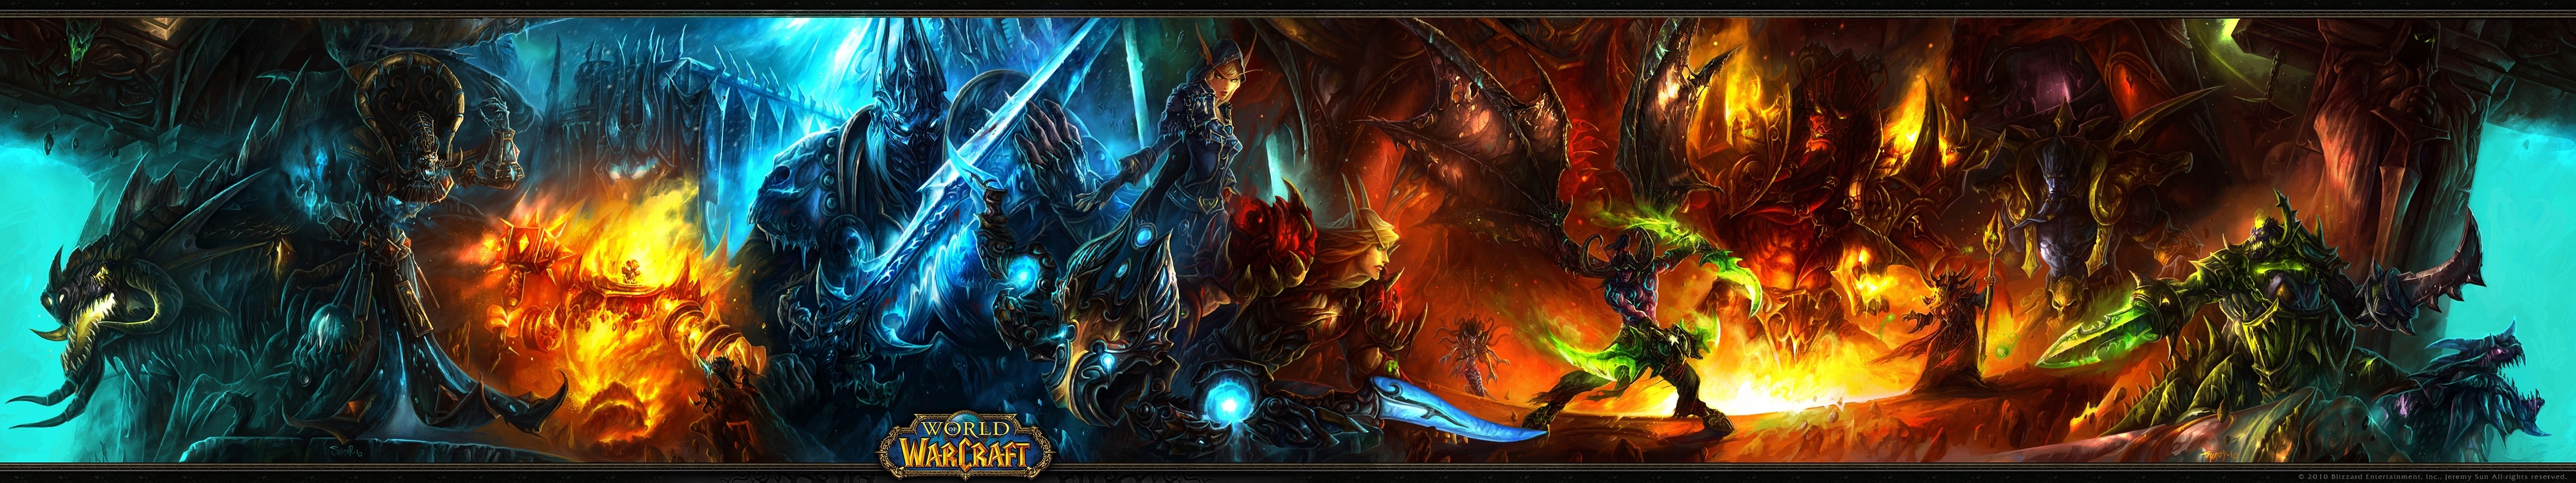 World Of Warcraft Computer Wallpapers, Desktop Backgrounds